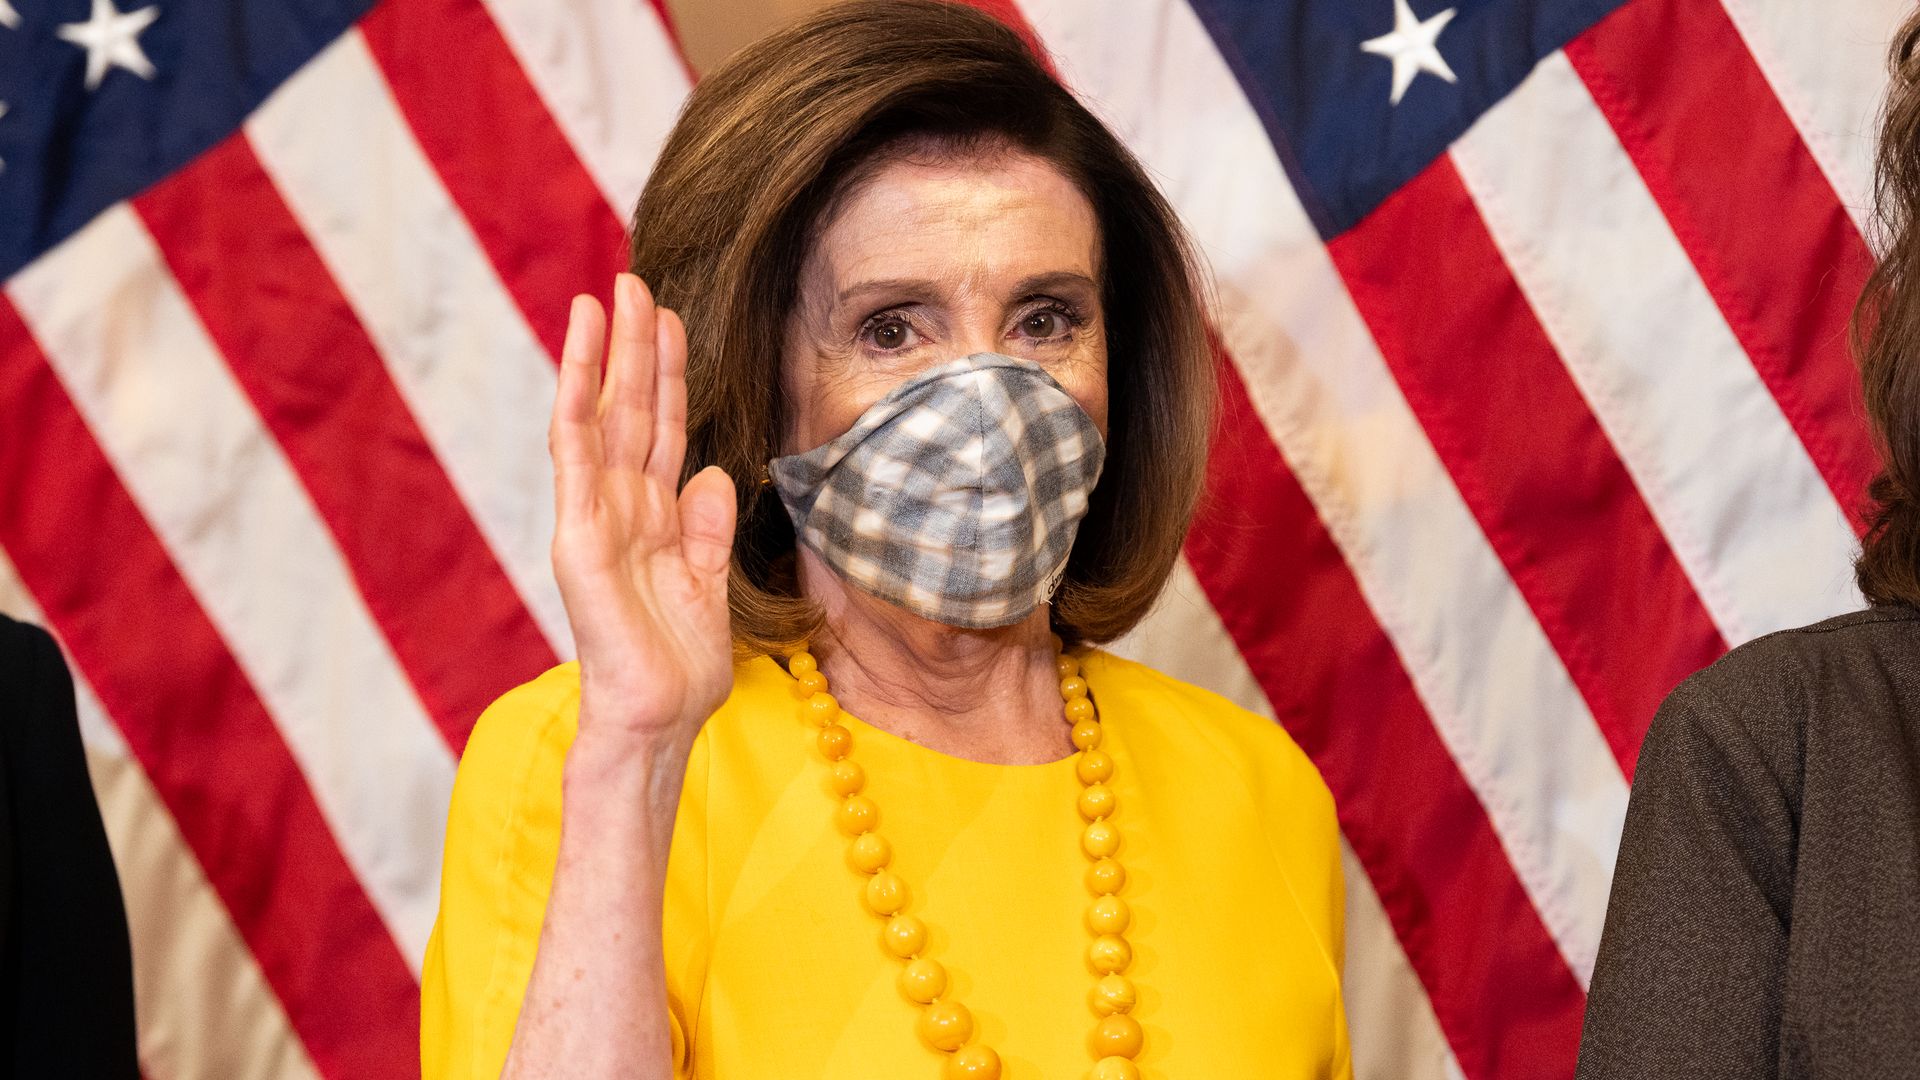 Nancy pelosi wearing a face mask